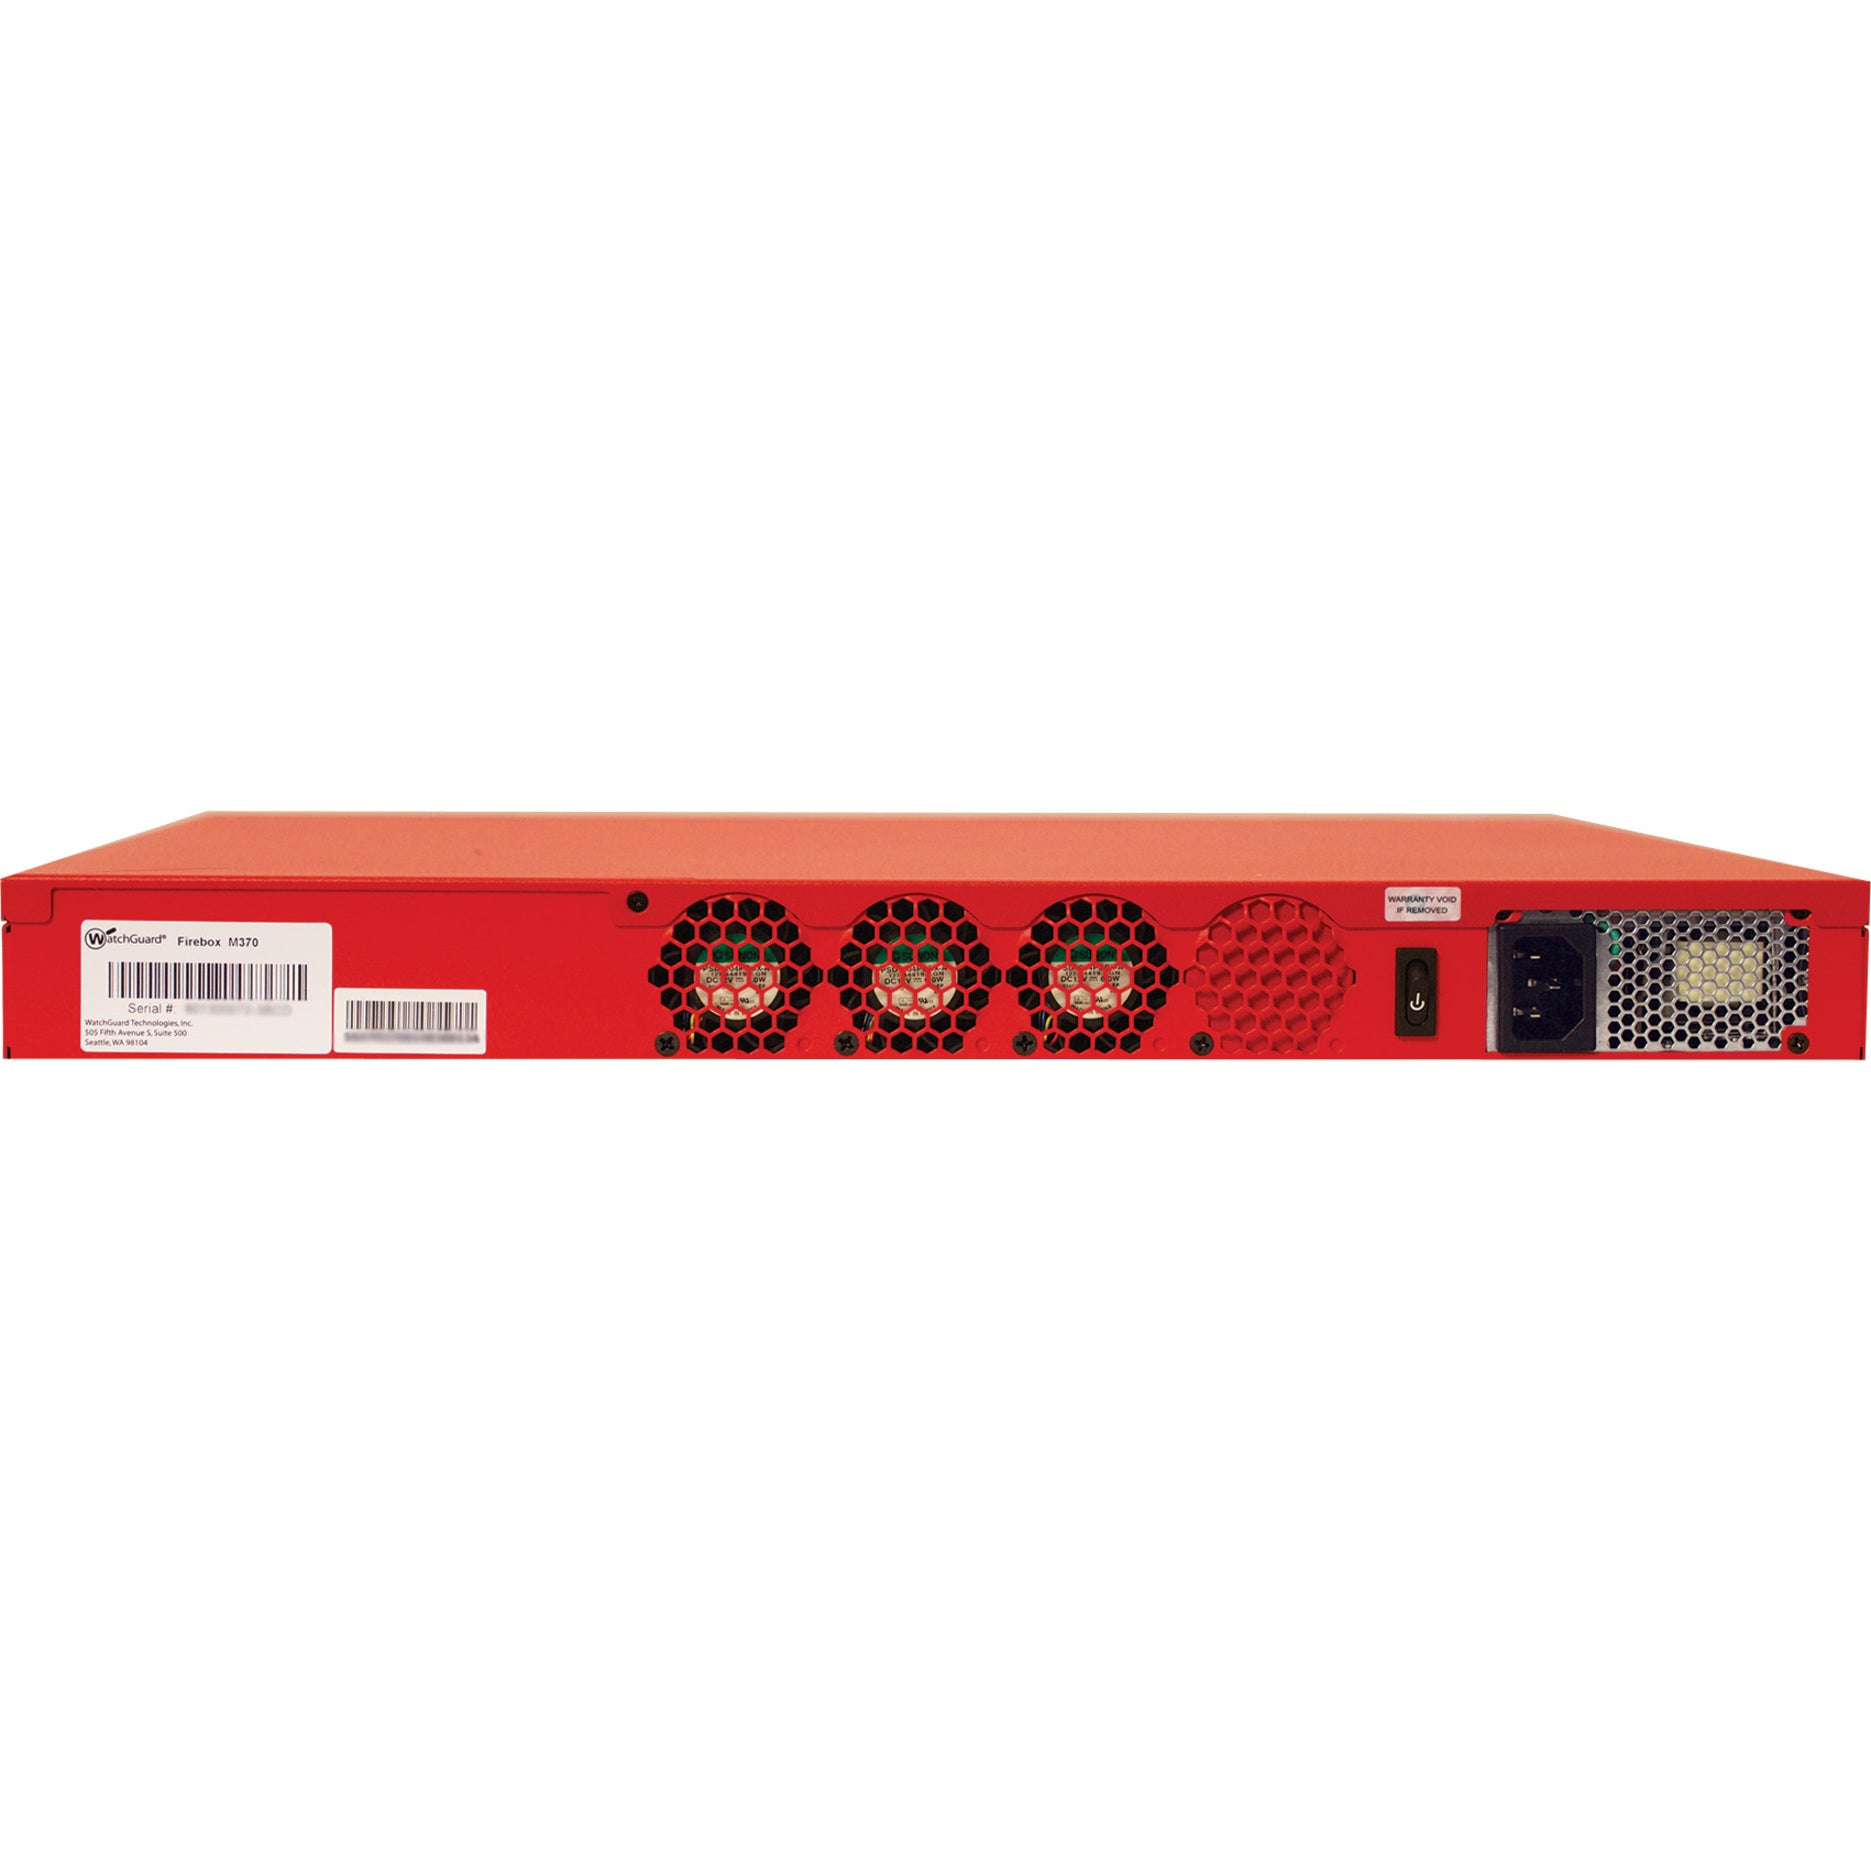 WatchGuard WGM37693 Firebox M370 Network Security/Firewall Appliance, Rack-mountable